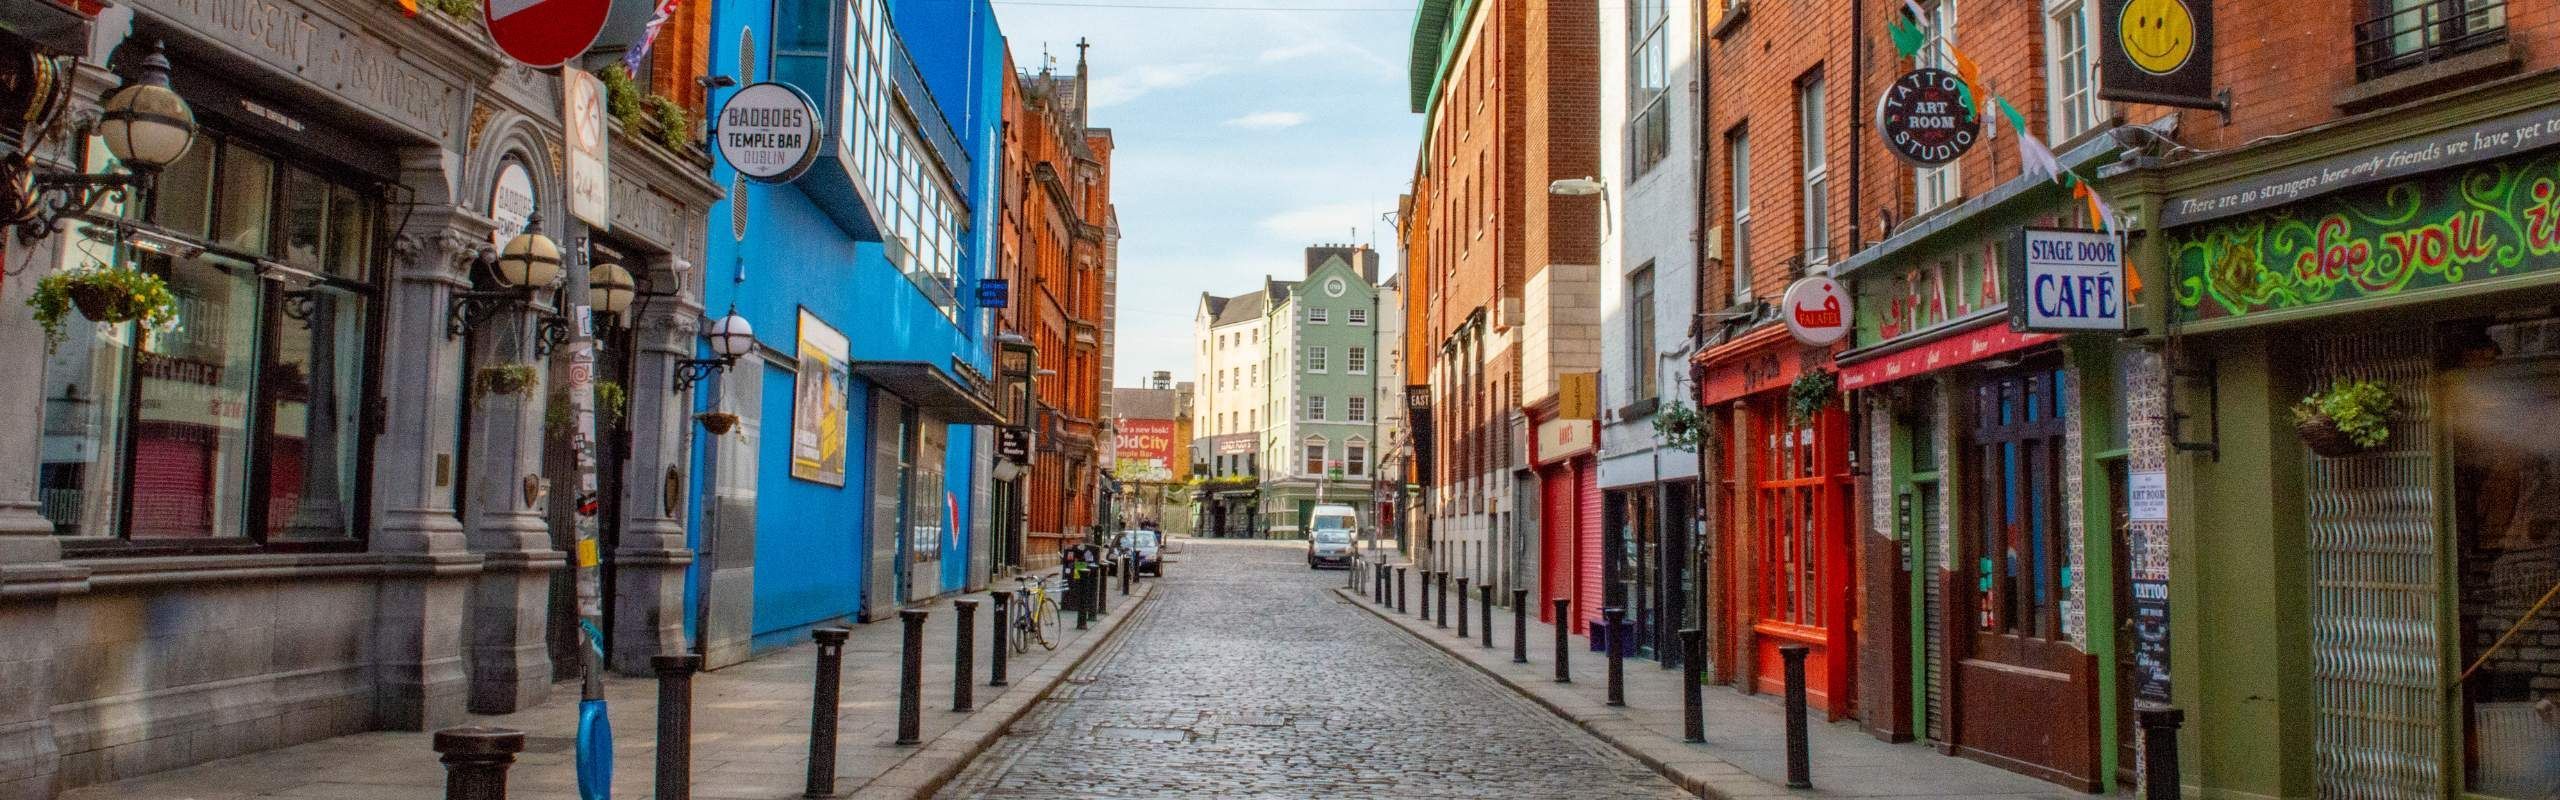 Empty city street in Dublin Ireland